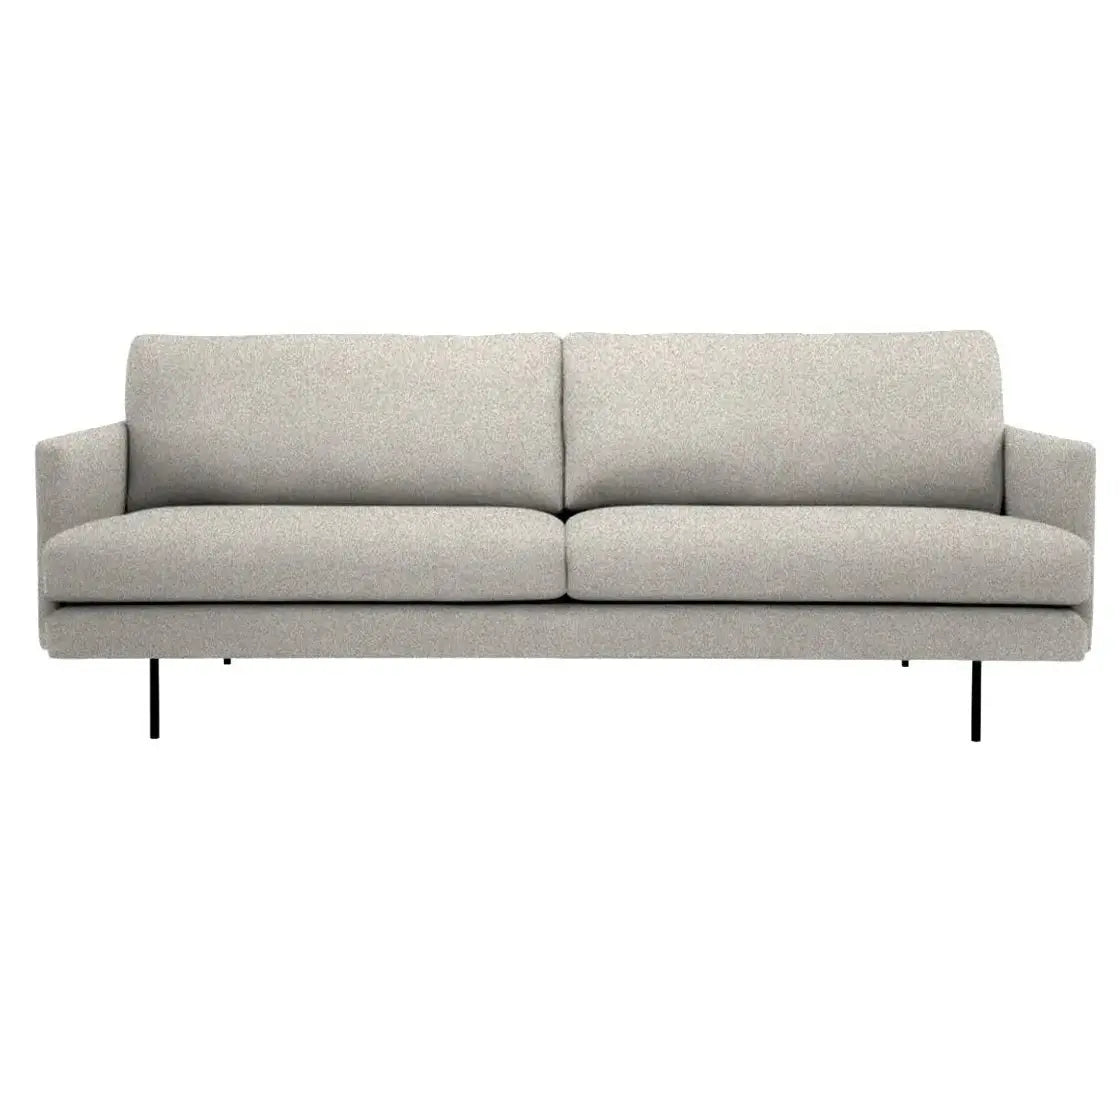 Inspira sohva 197cm